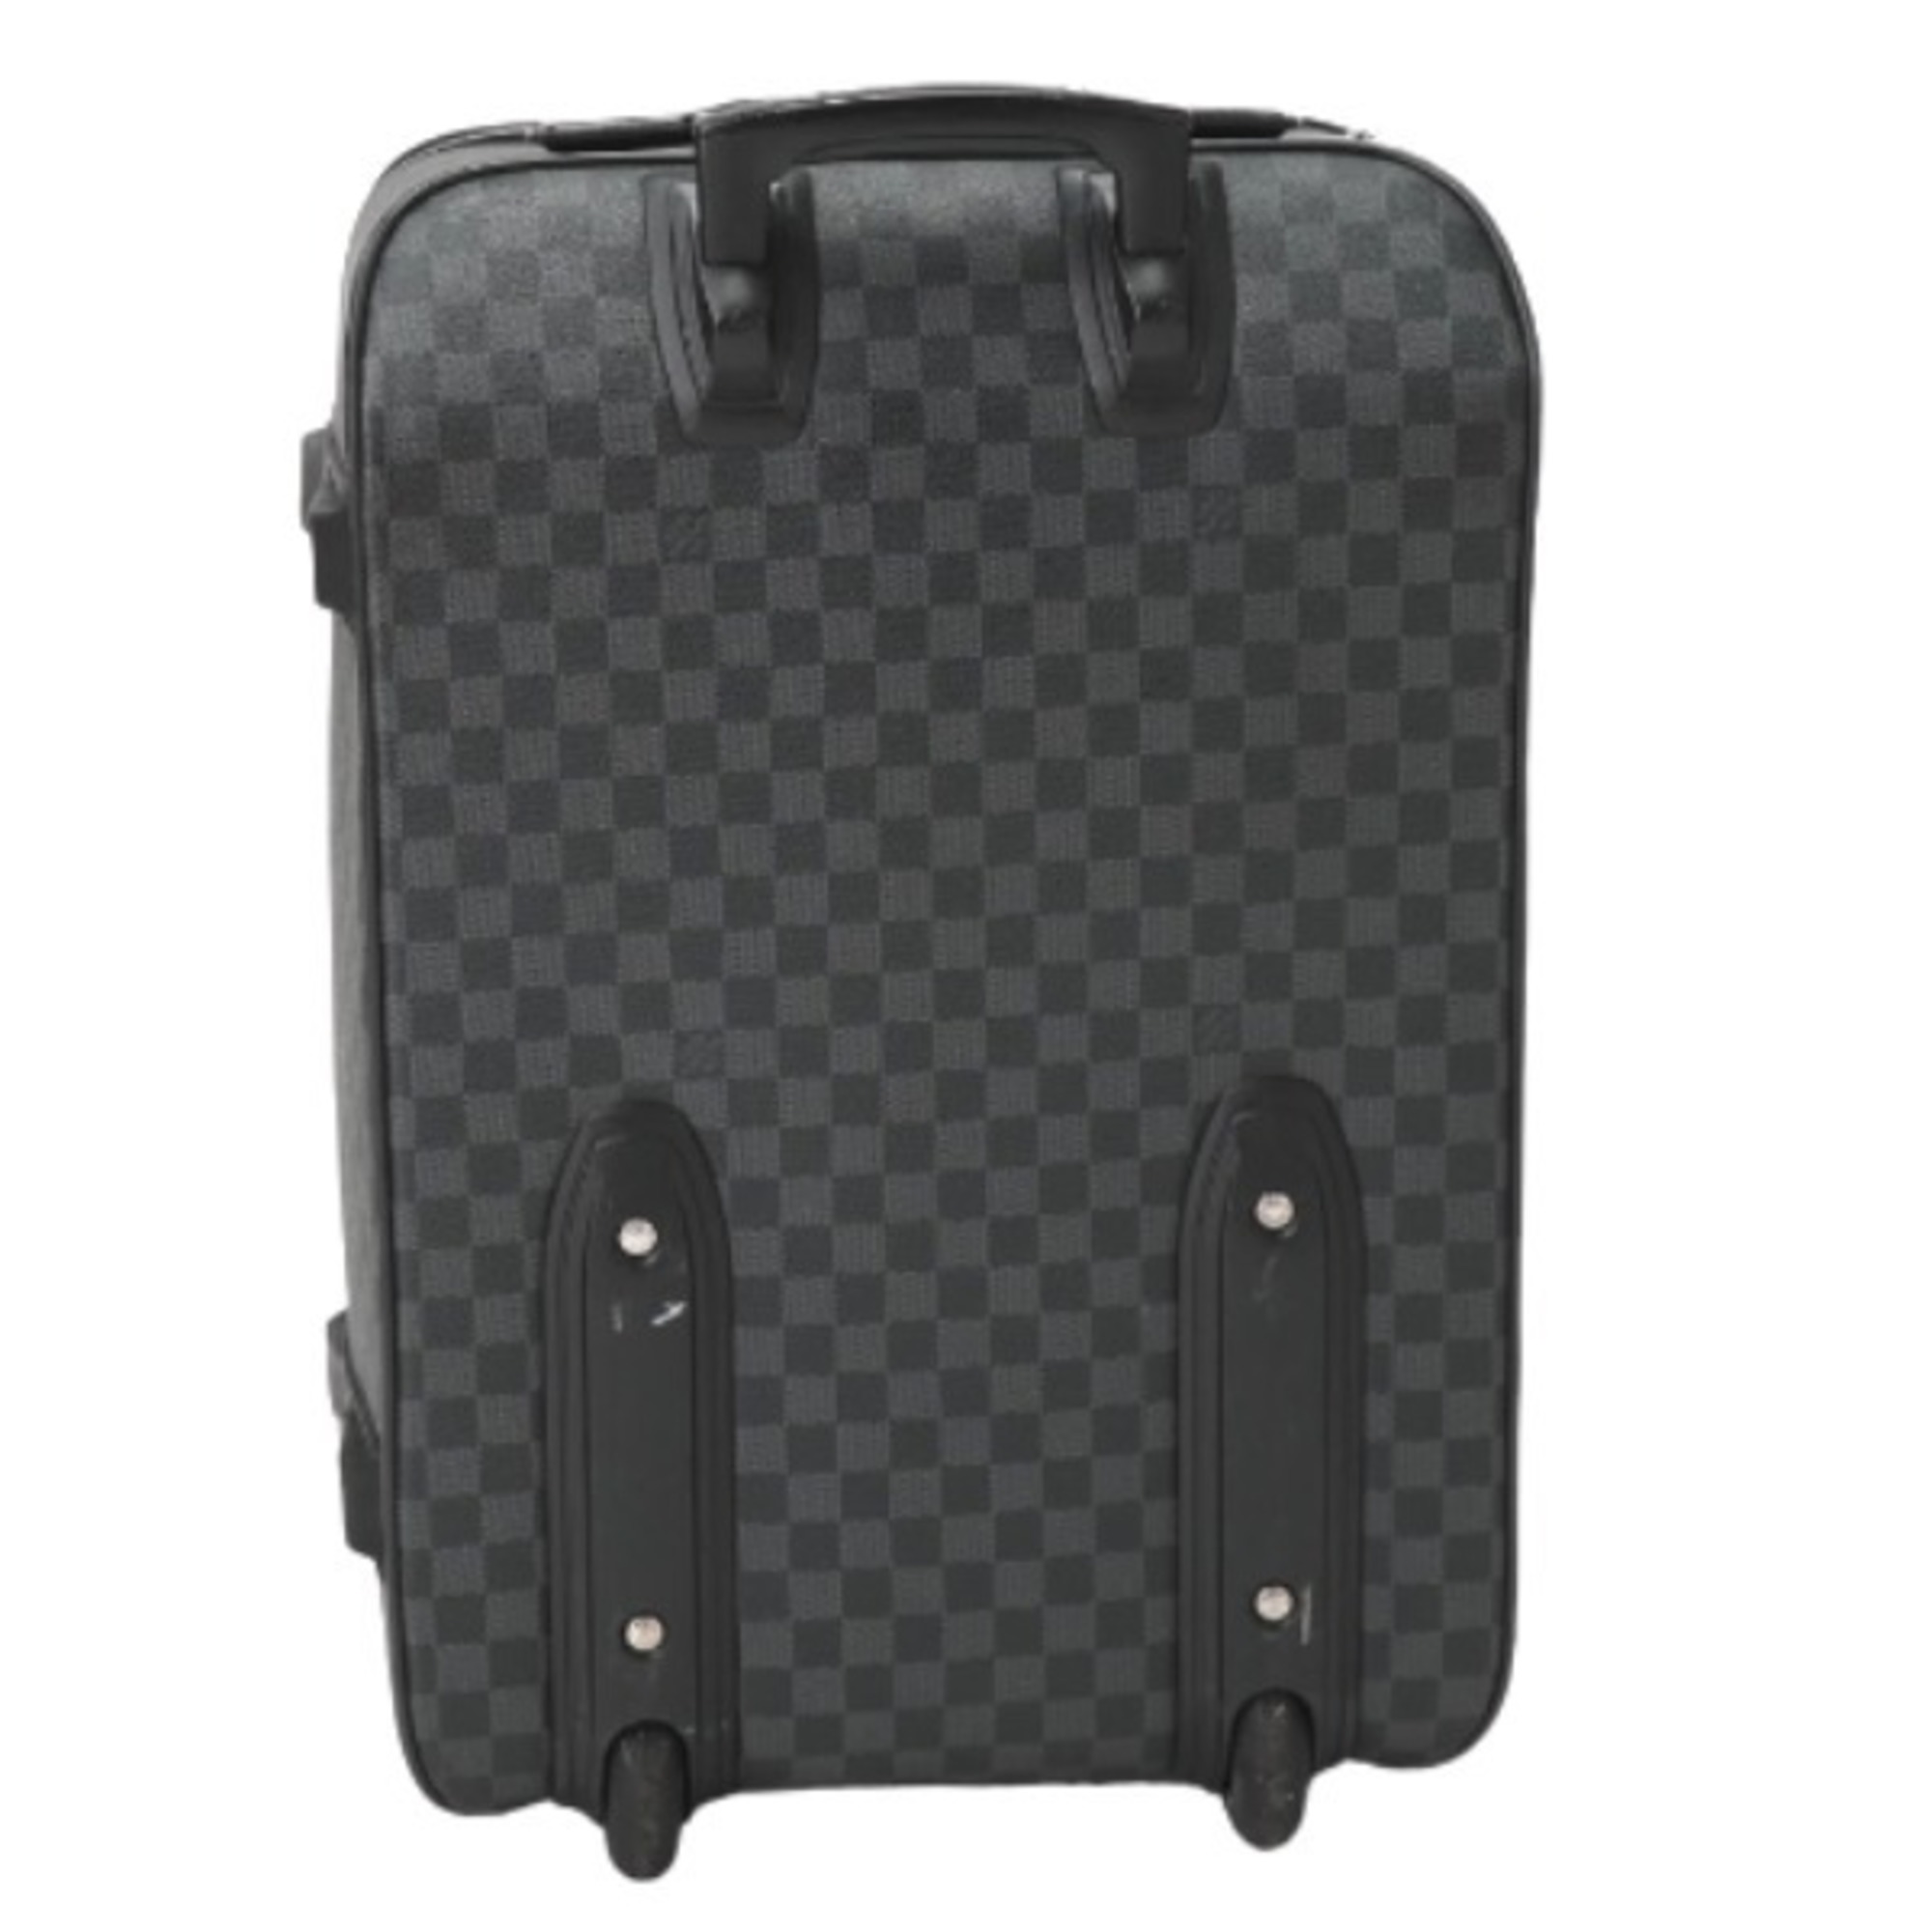 LOUIS VUITTON Travel bag with wheels Damier Pegas 55 N23299 Louis Vuitton Gray Carry Bag LV